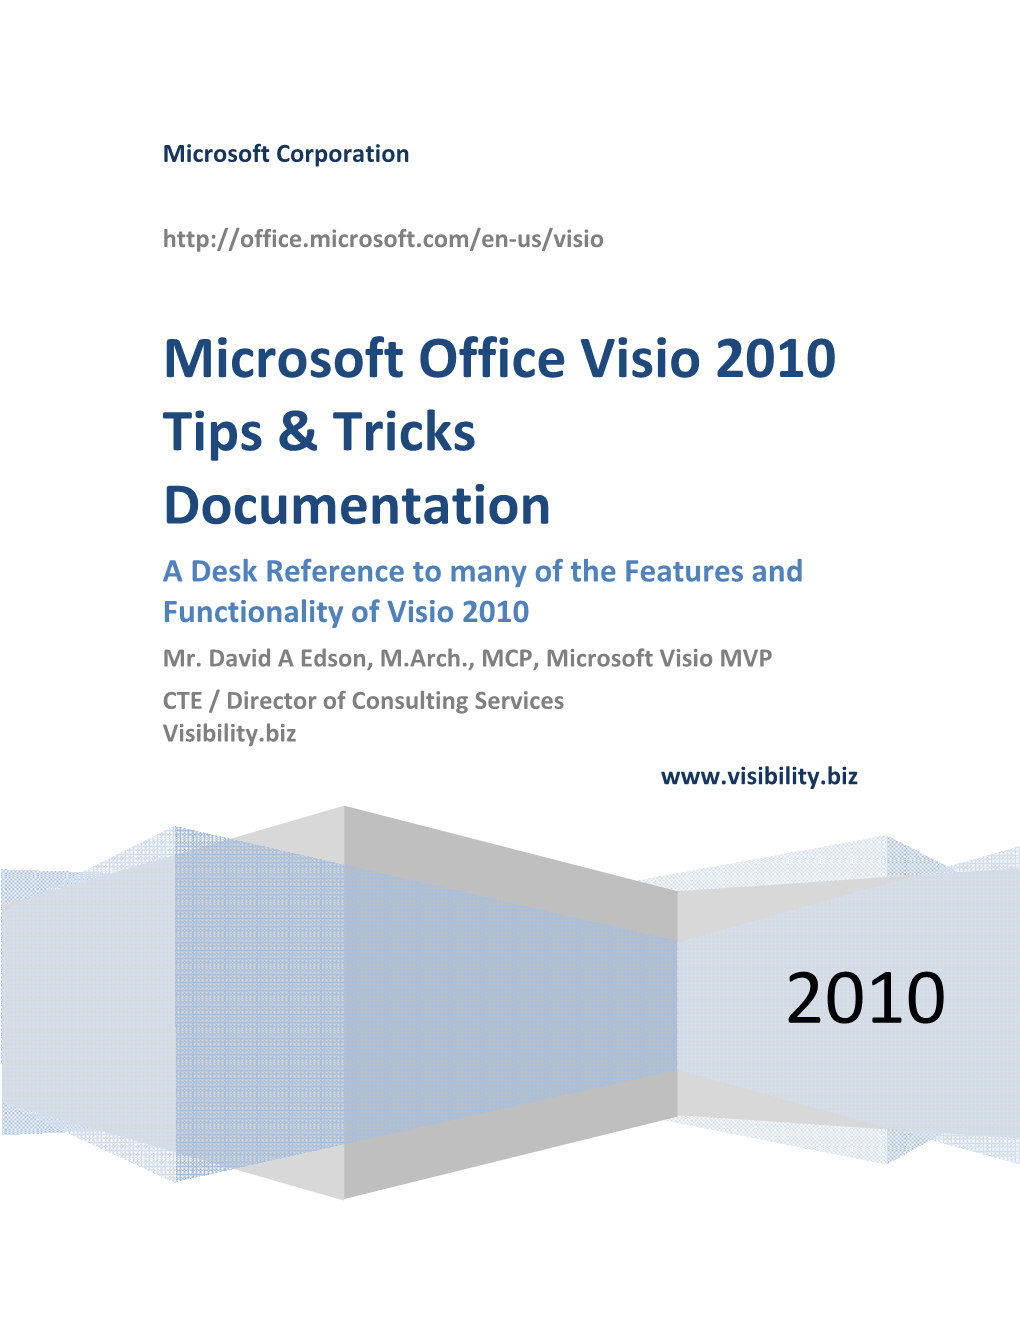 Microsoft Office Visio 2010 Tips & Tricks Documentation